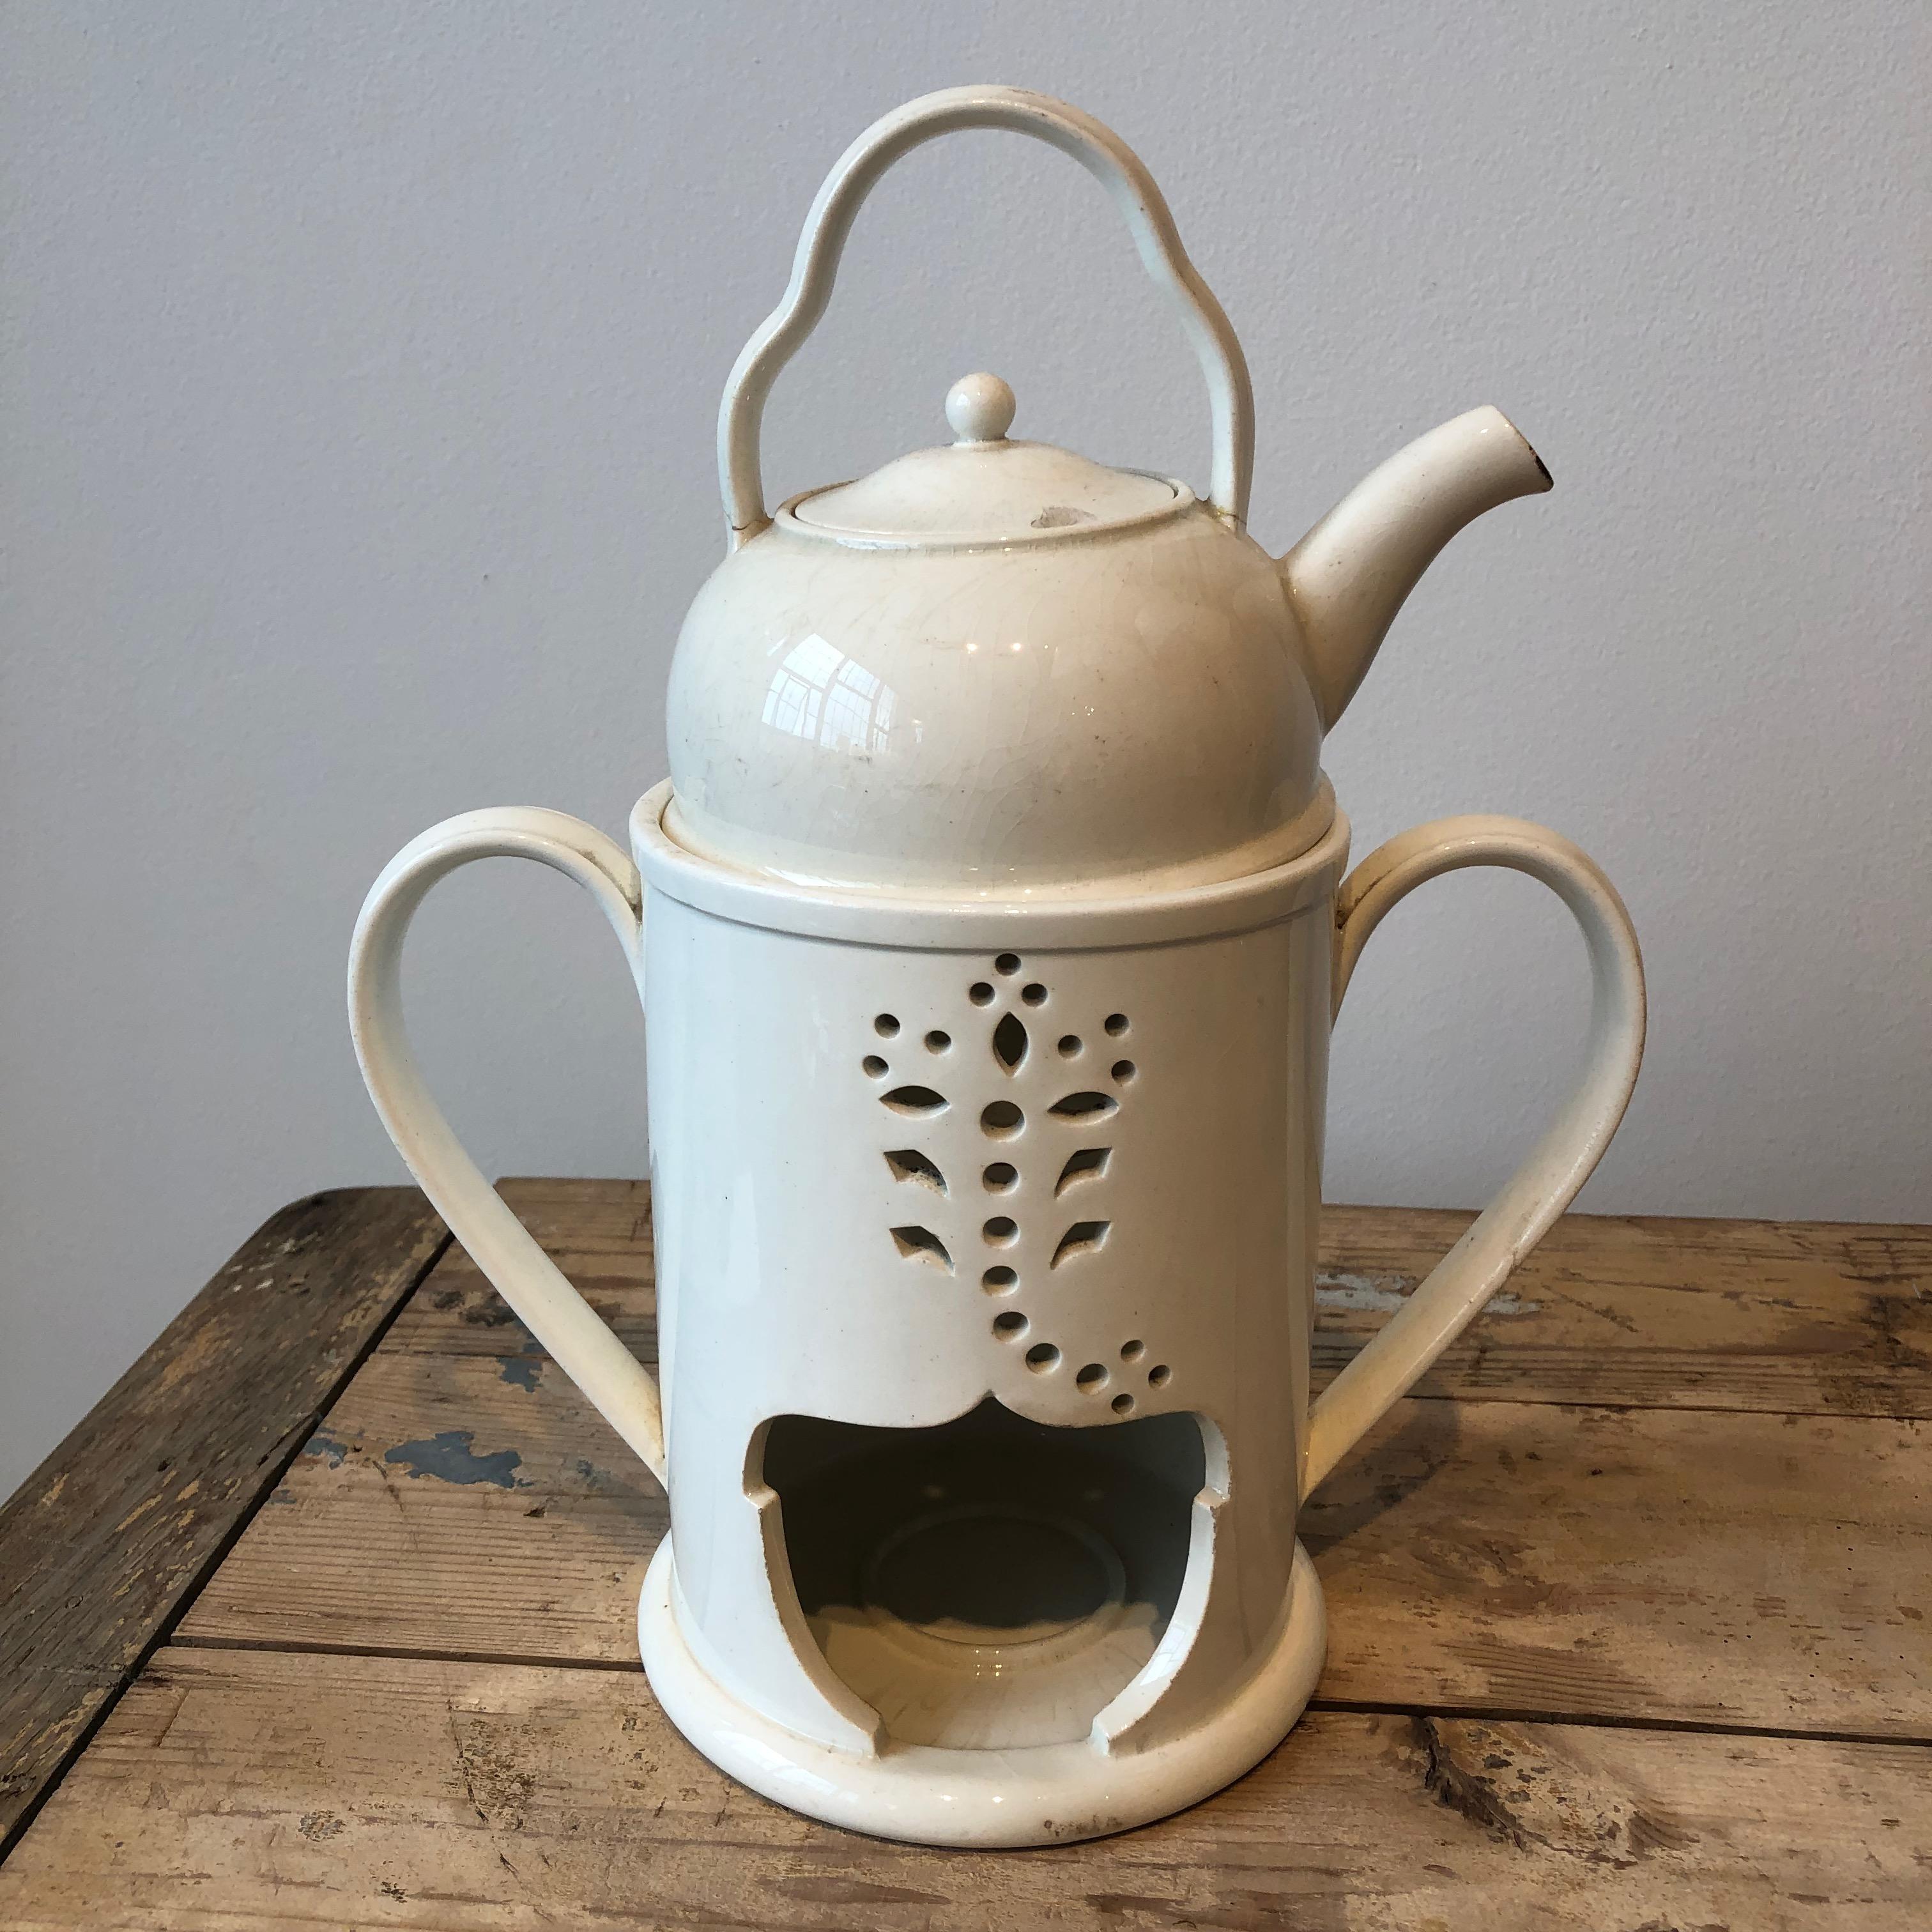 19th century English Wedgwood creamware pot and warmer, circa 1817.